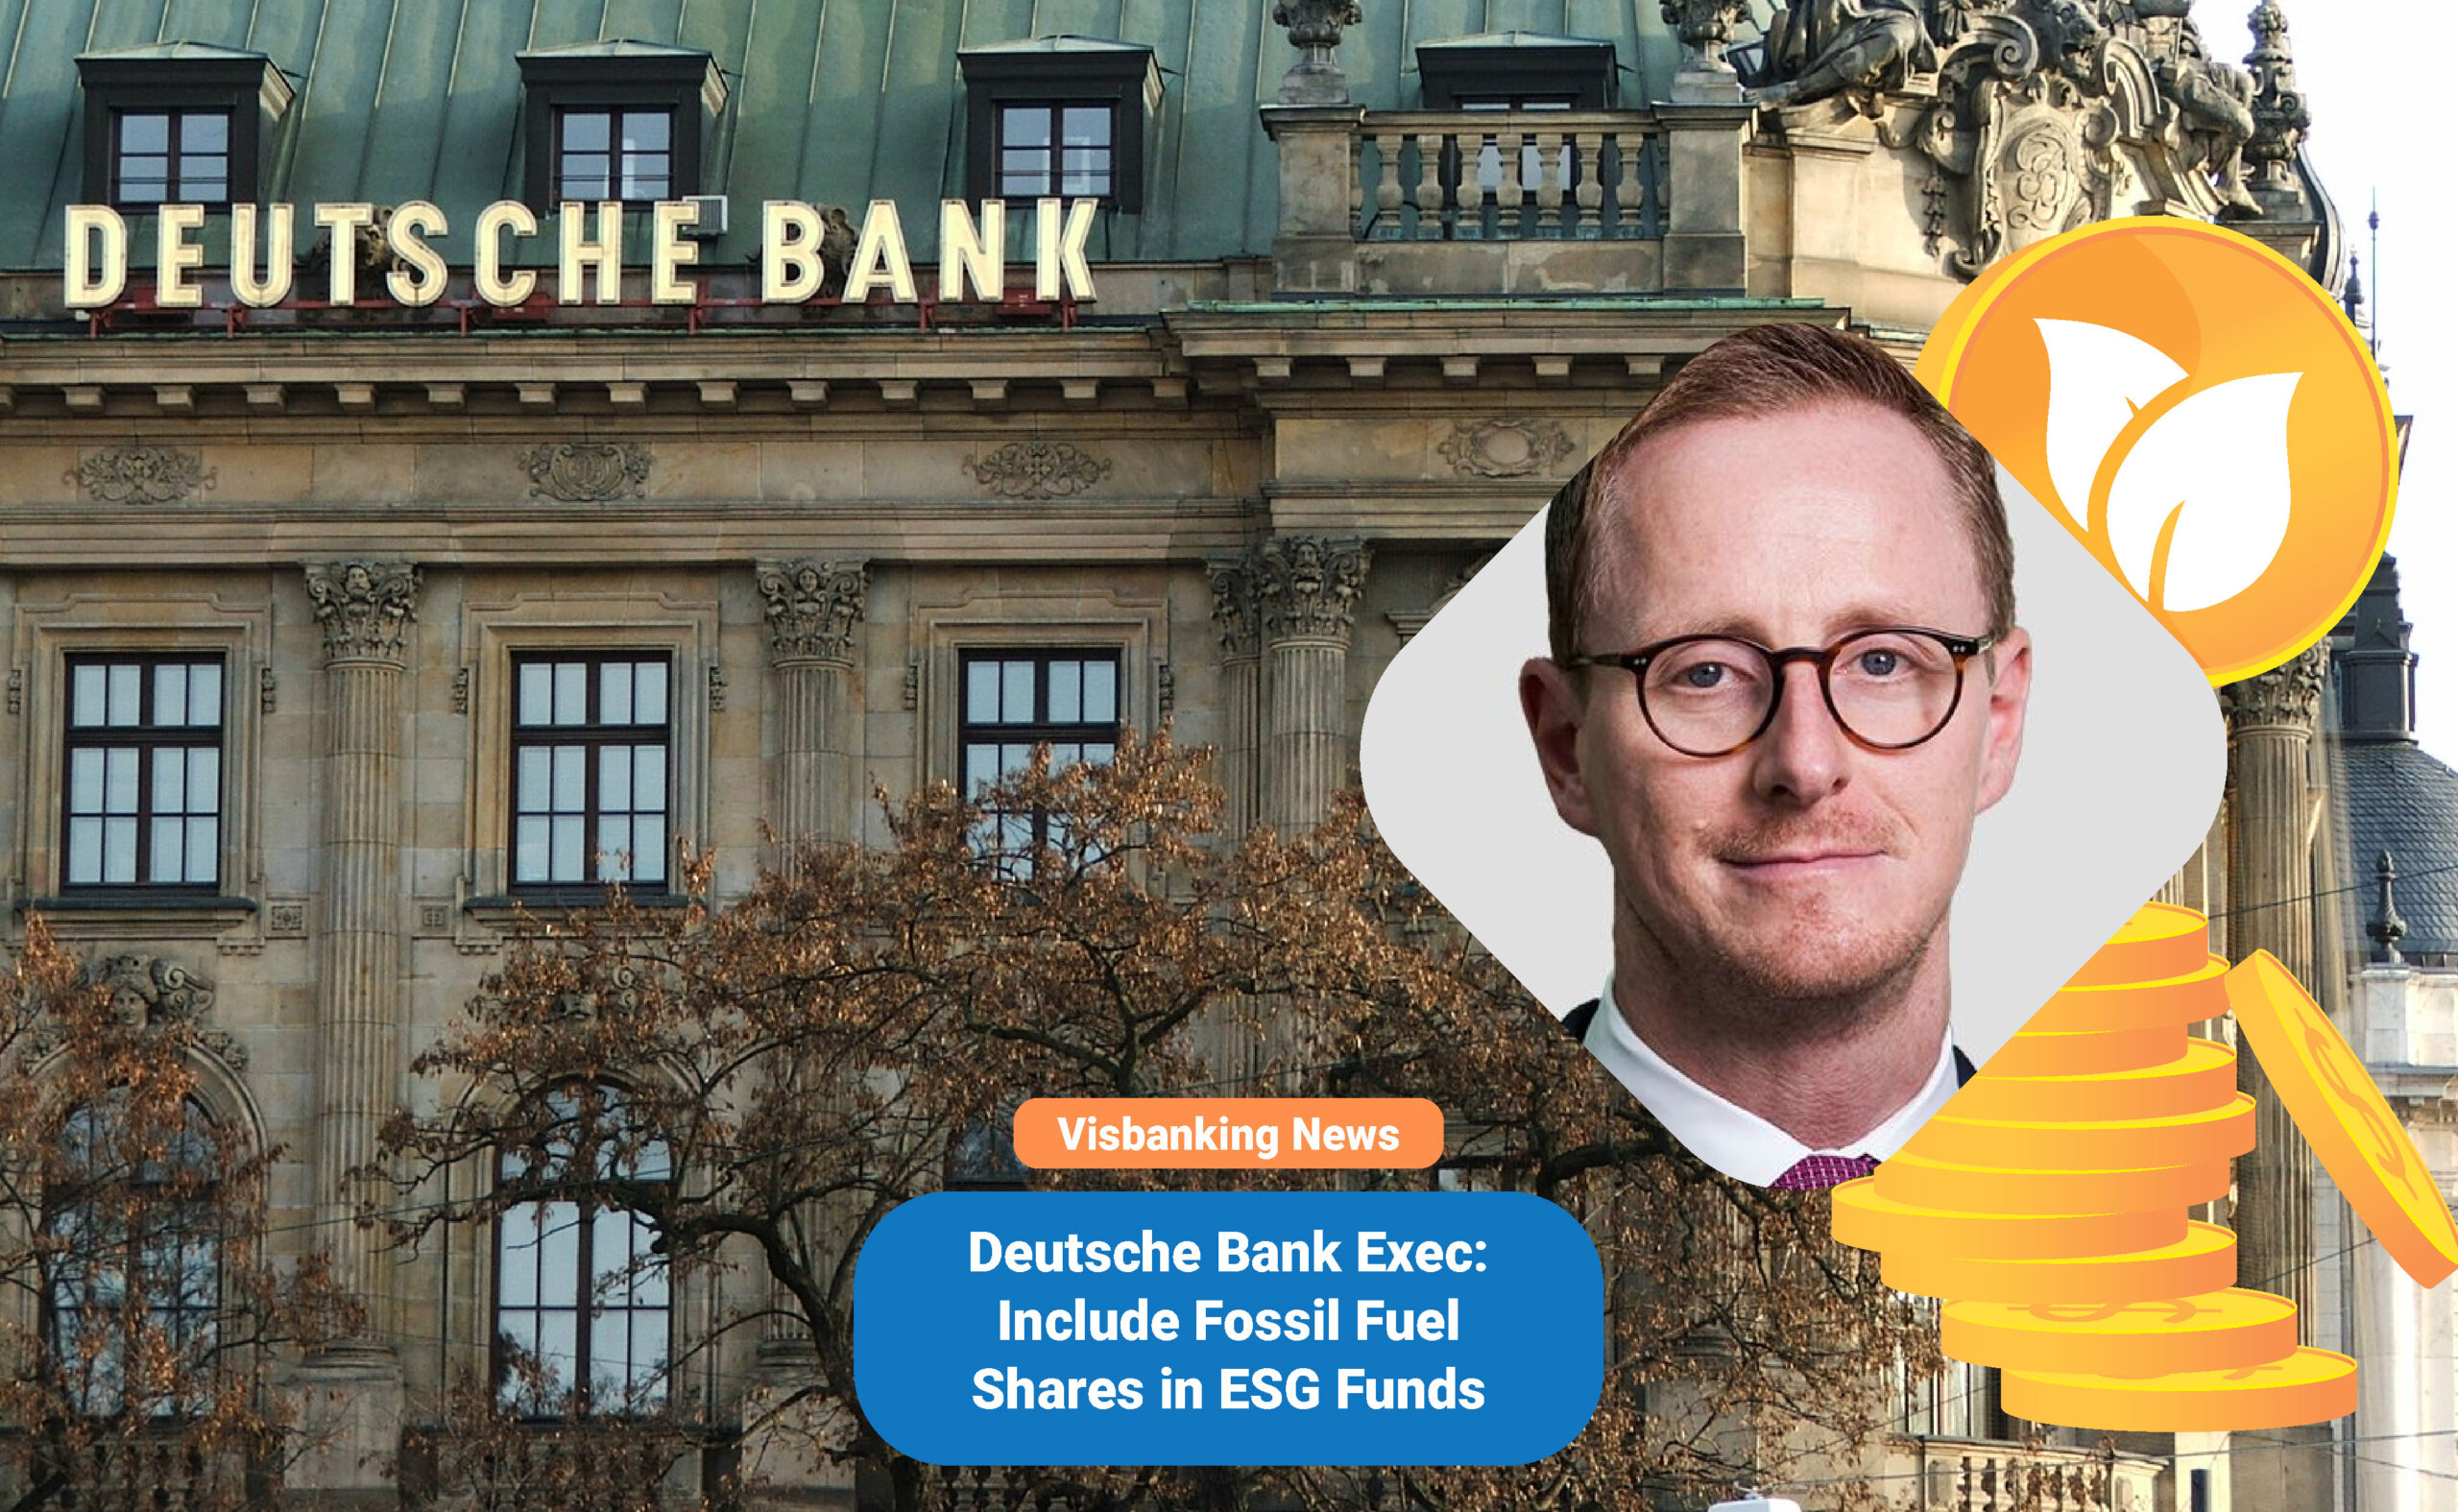 Deutsche Bank Exec: Include Fossil Fuel Shares in ESG Funds